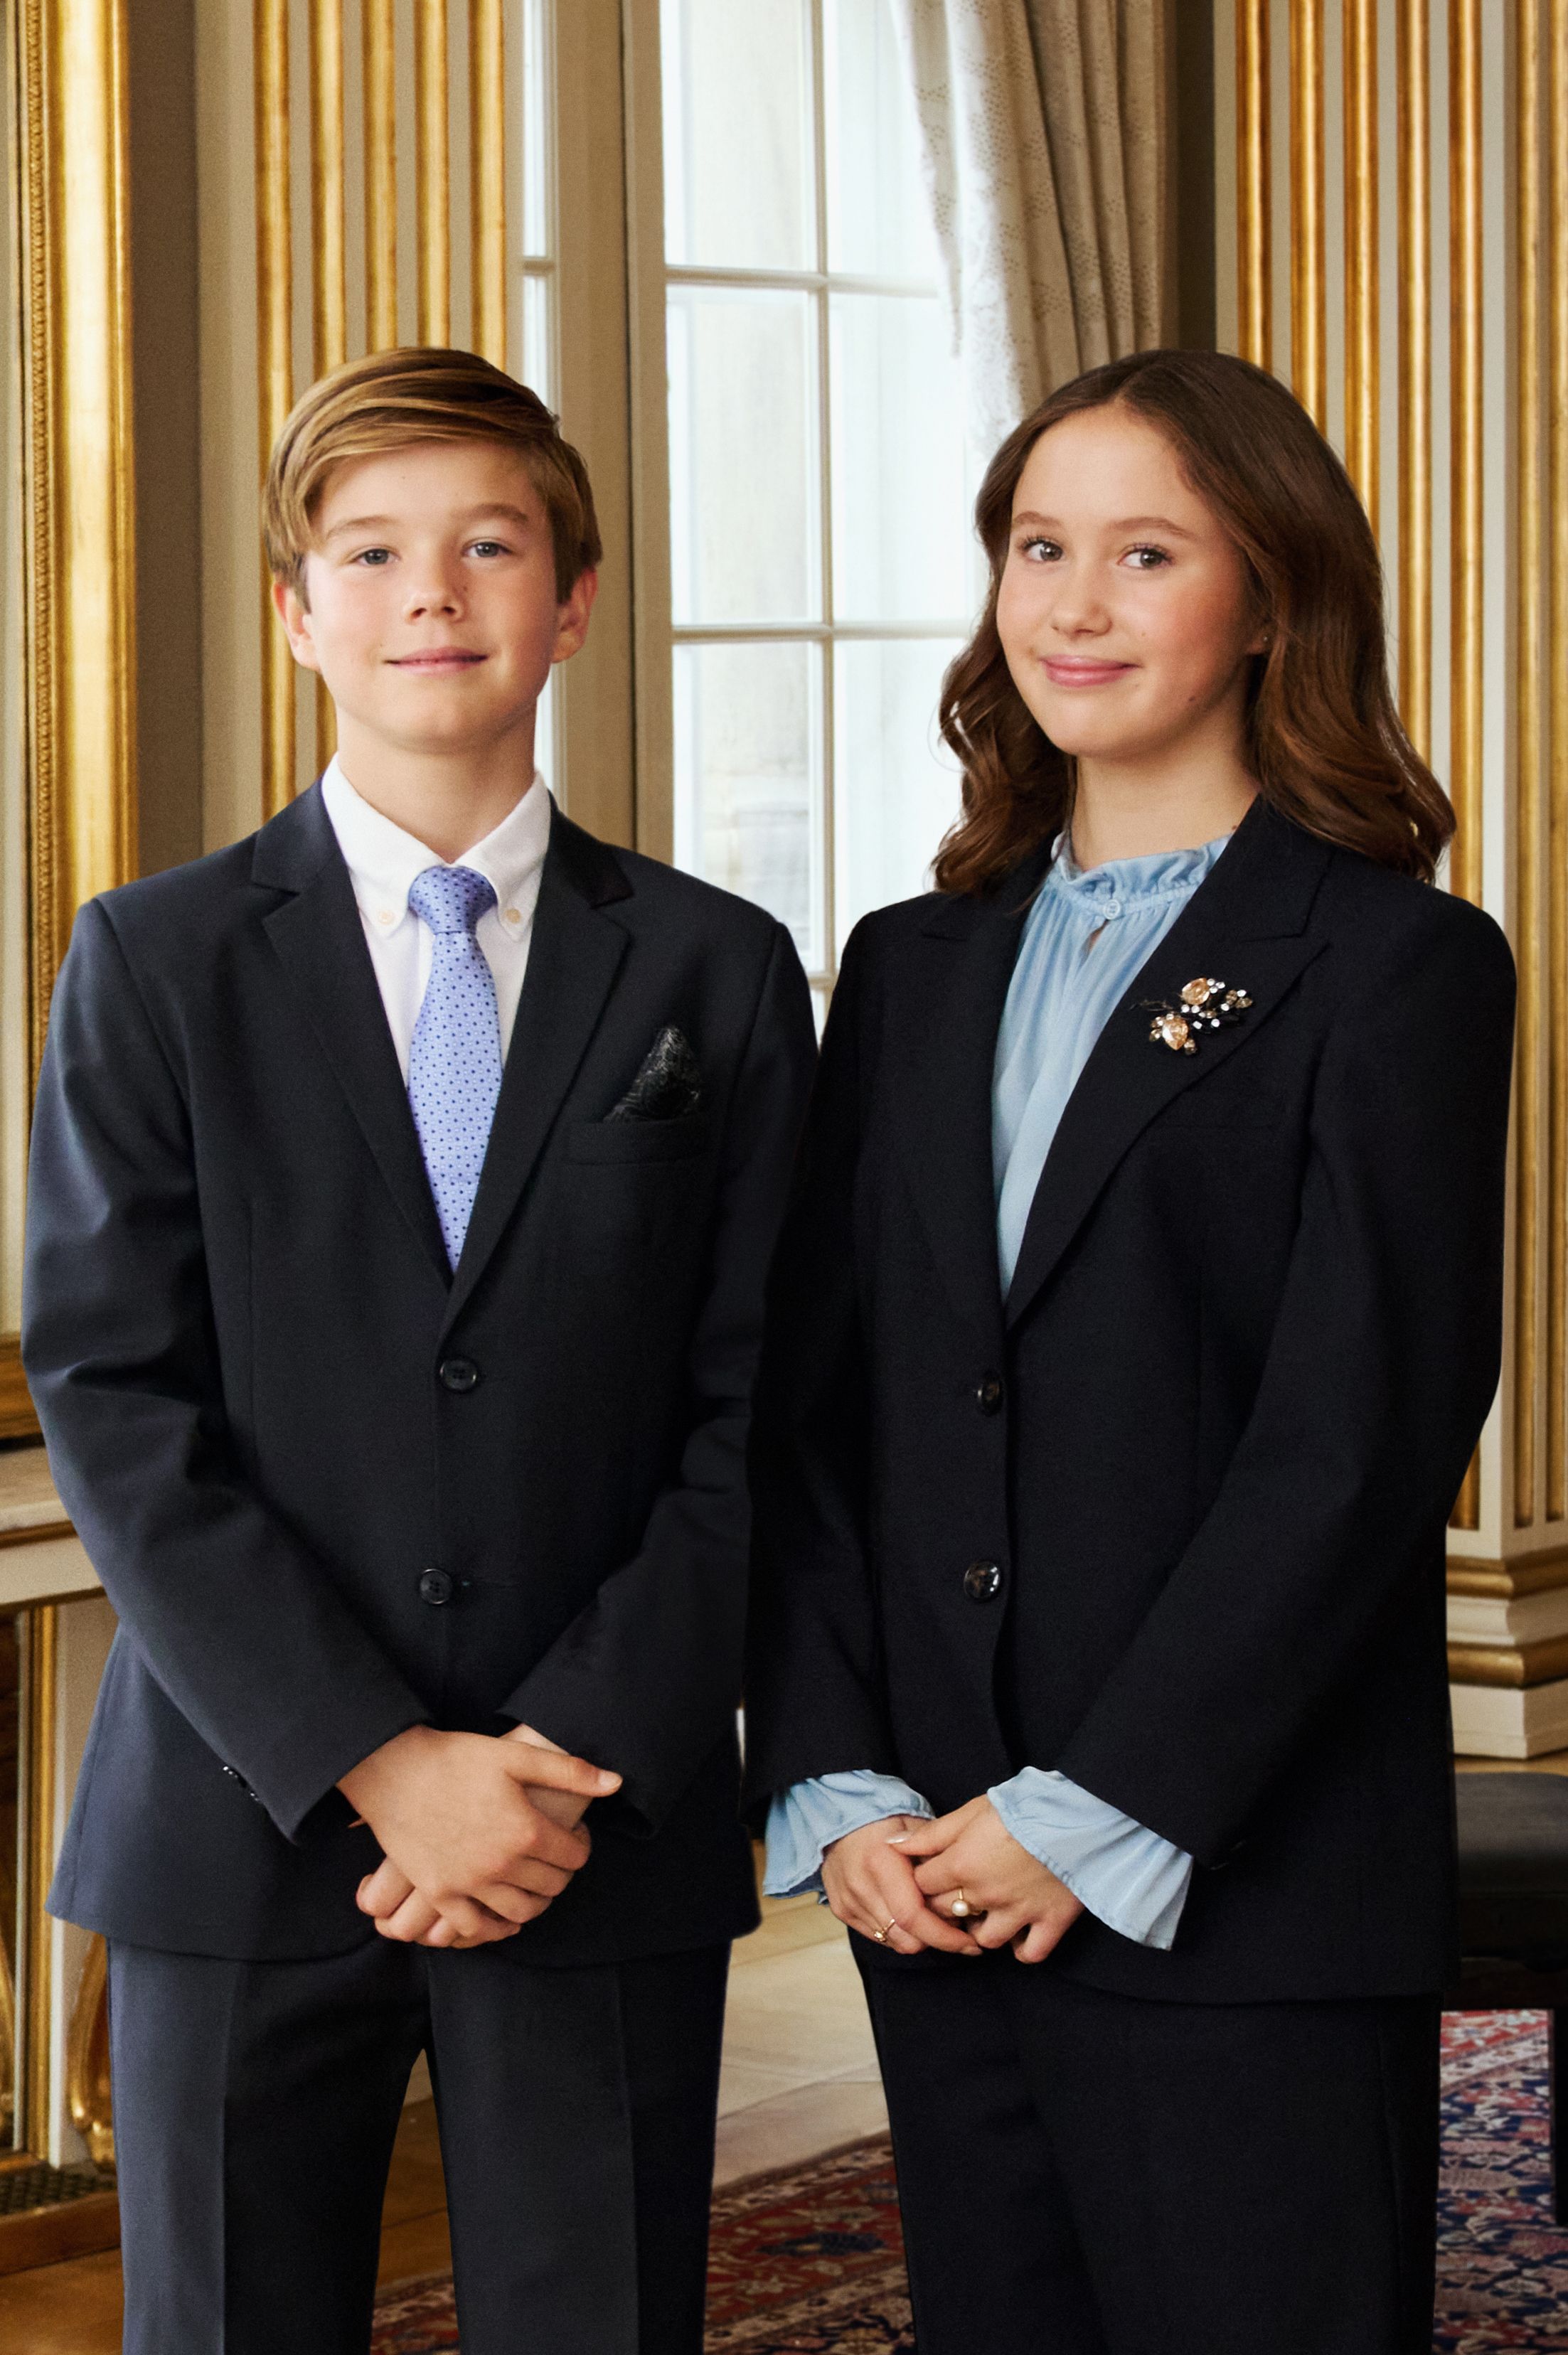 Crown Princess Mary Wears Sentimental Brooch on Prince Christian's Birthday